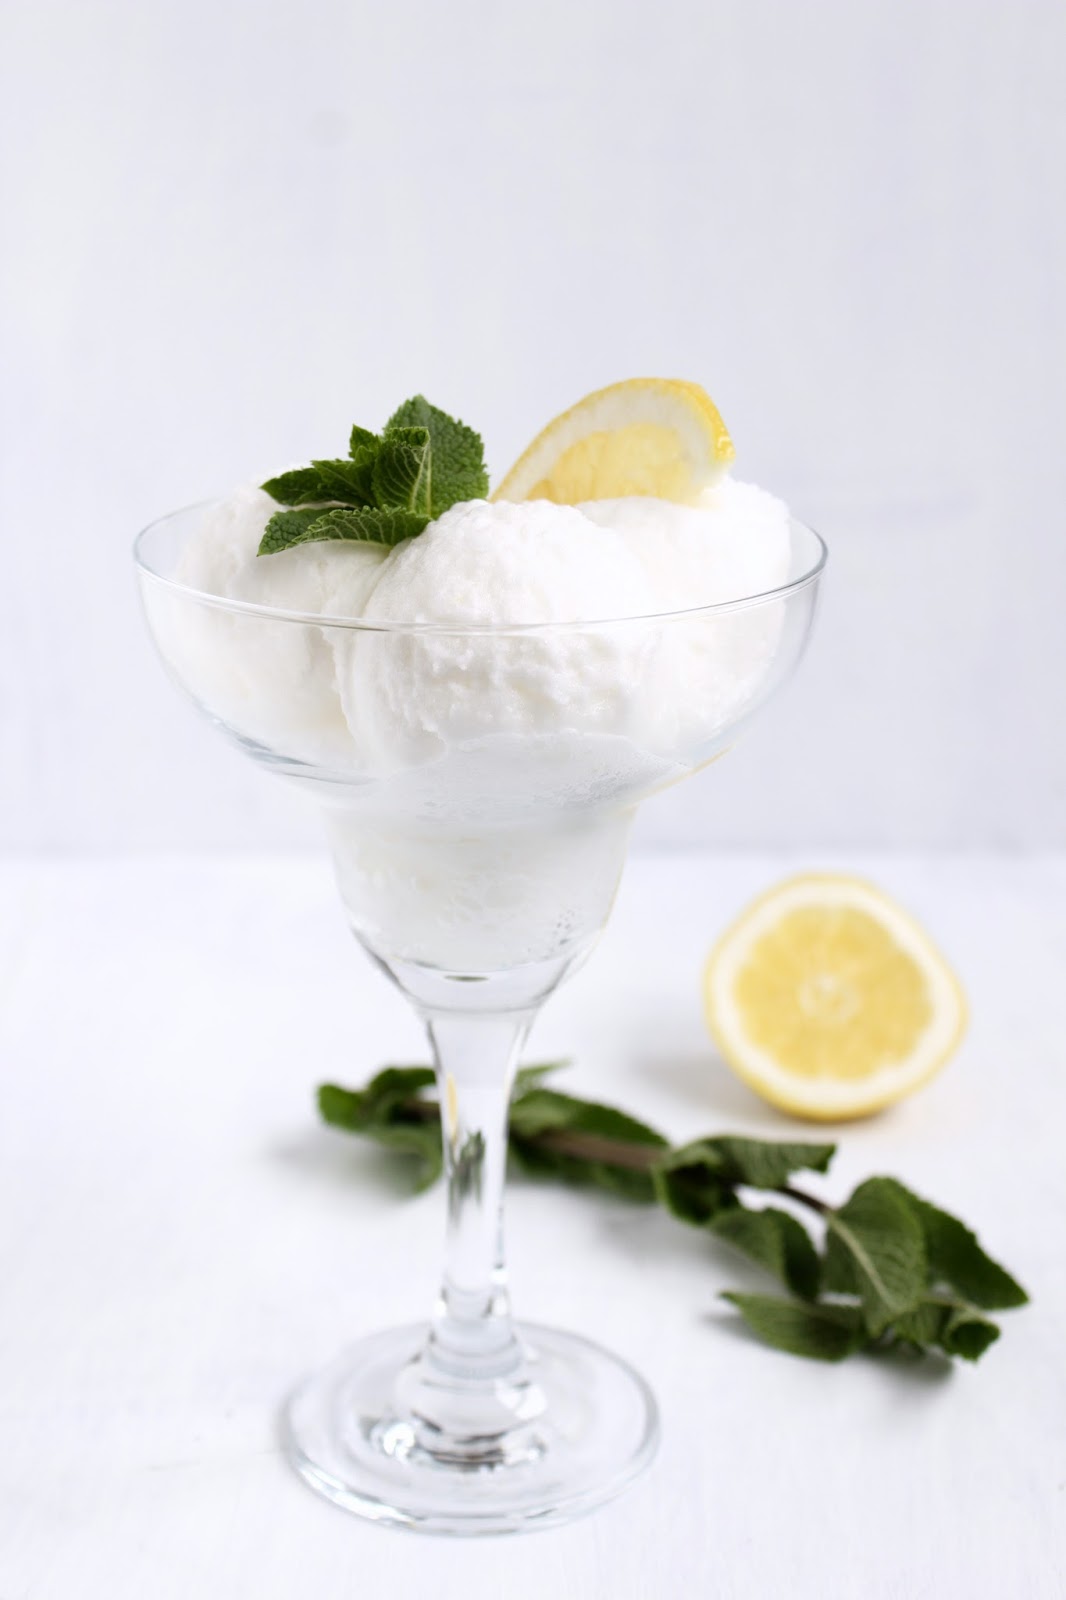 Rezepte mit Herz: Zitronensorbet ♡ Sorbetto al limone